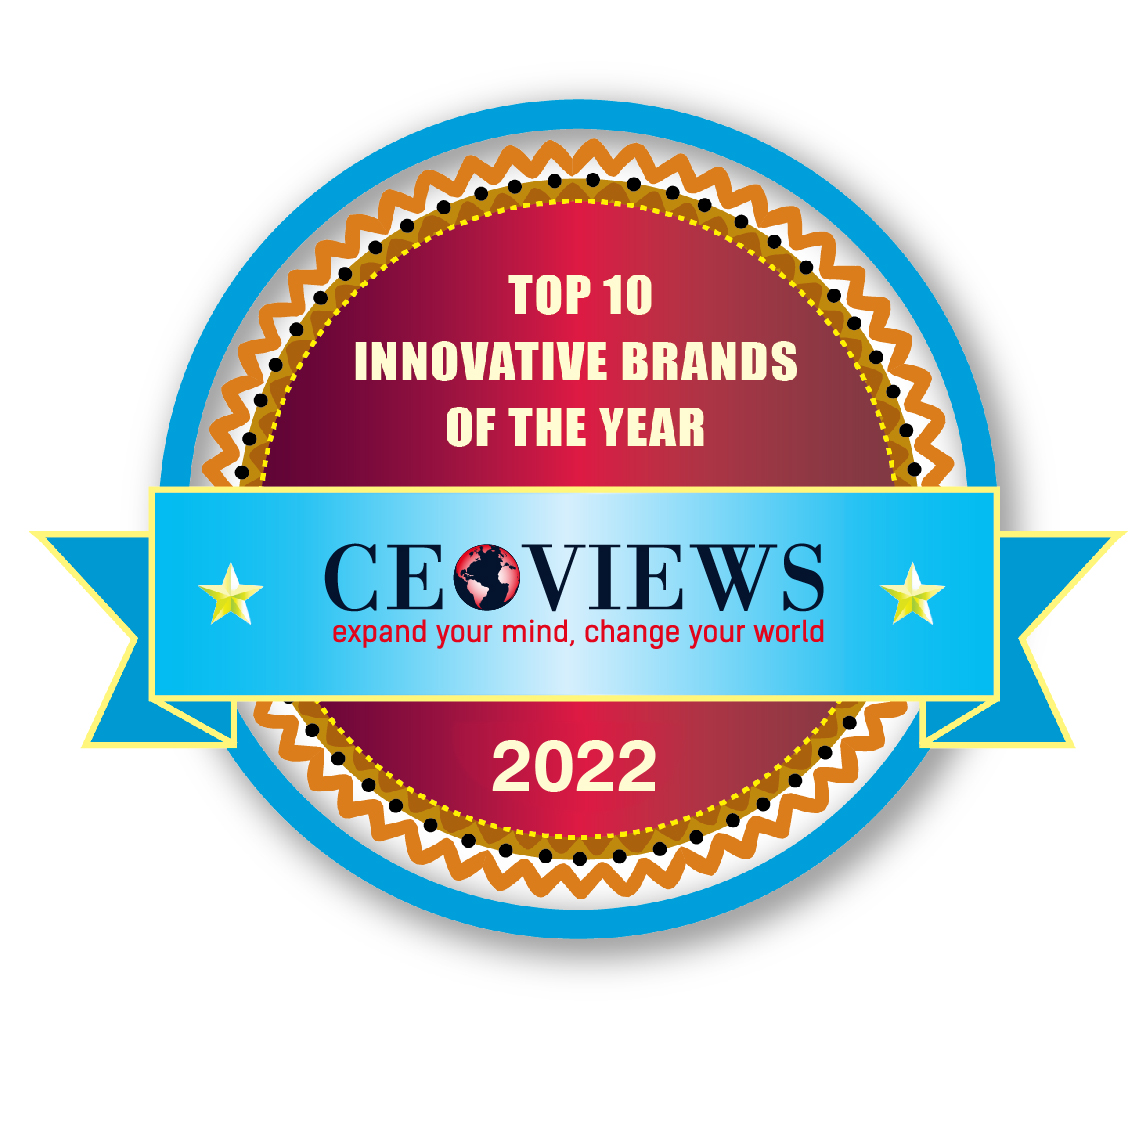 Top 10 innovative brands